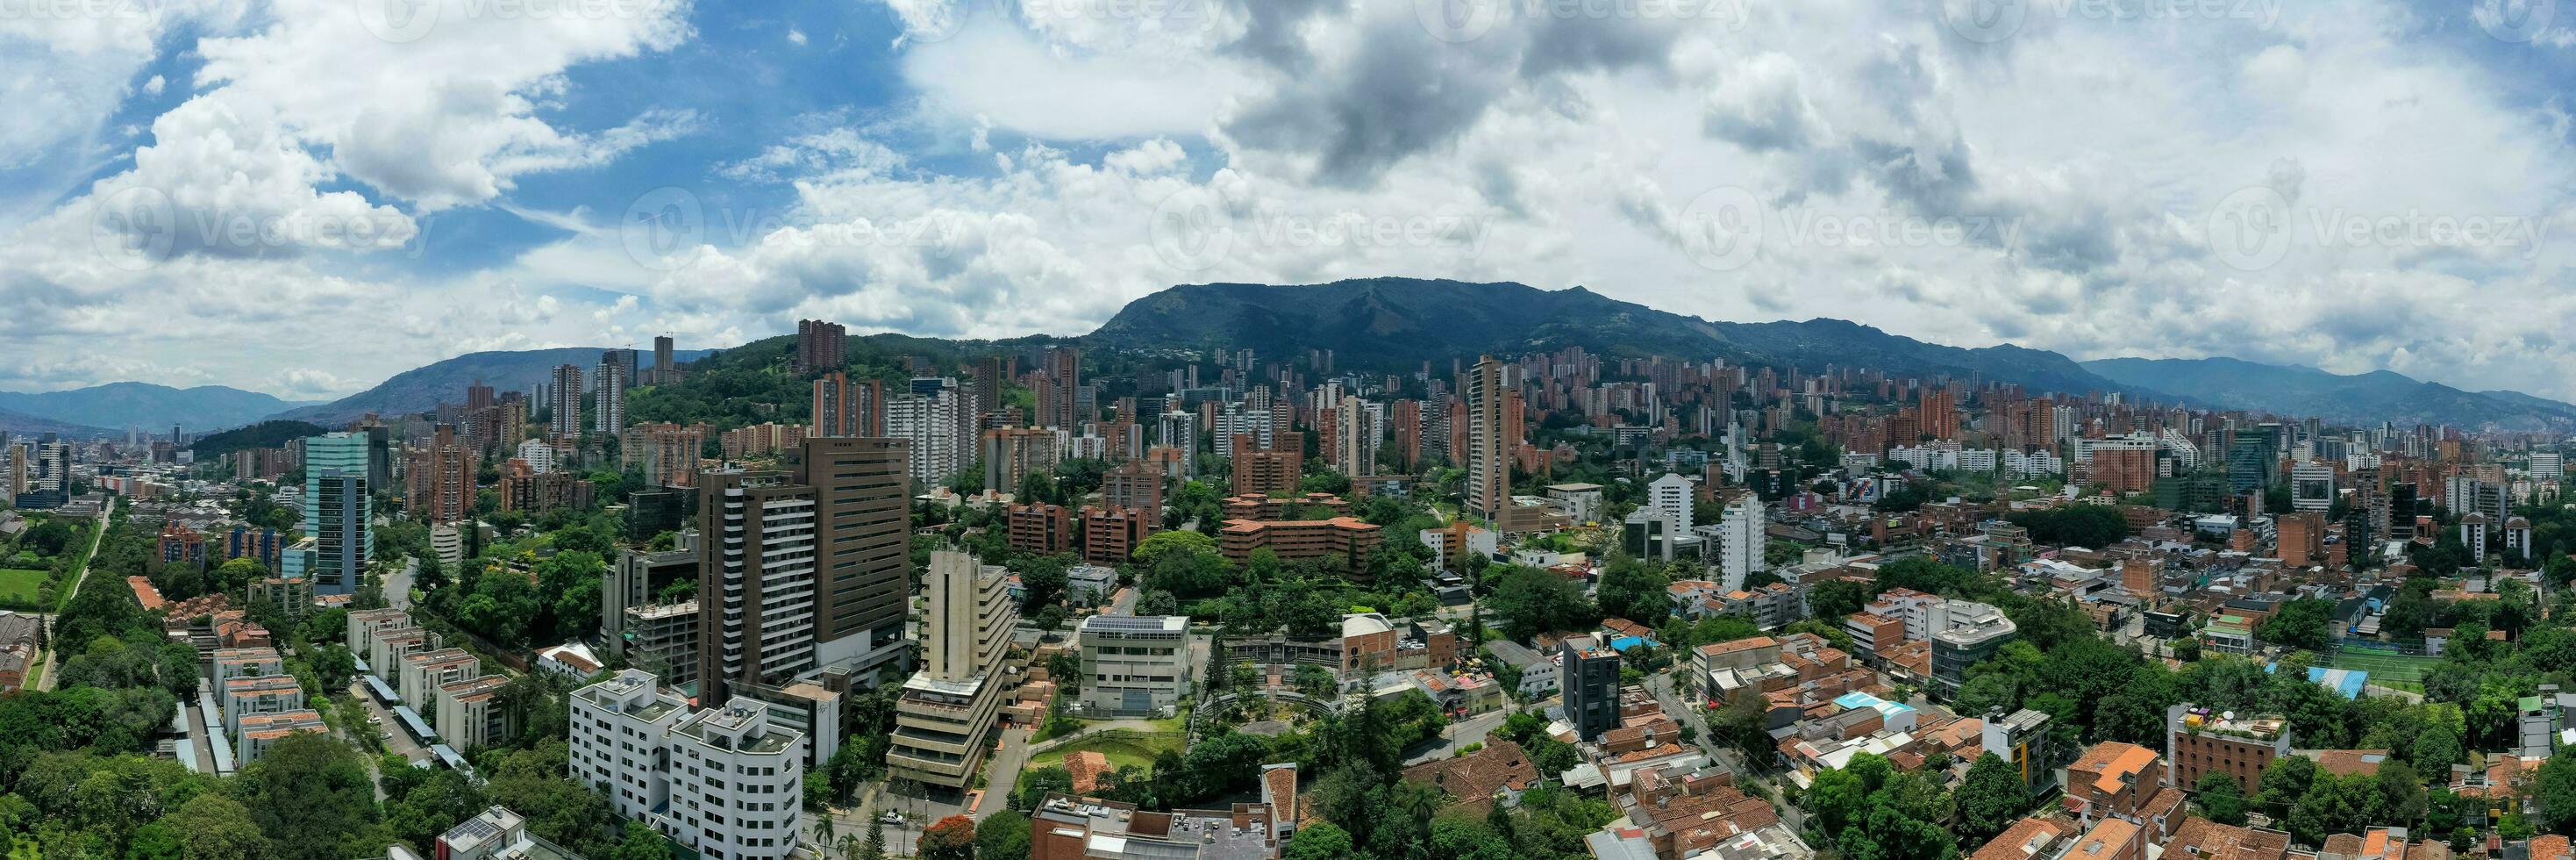 panorama - bogotá, Colômbia foto